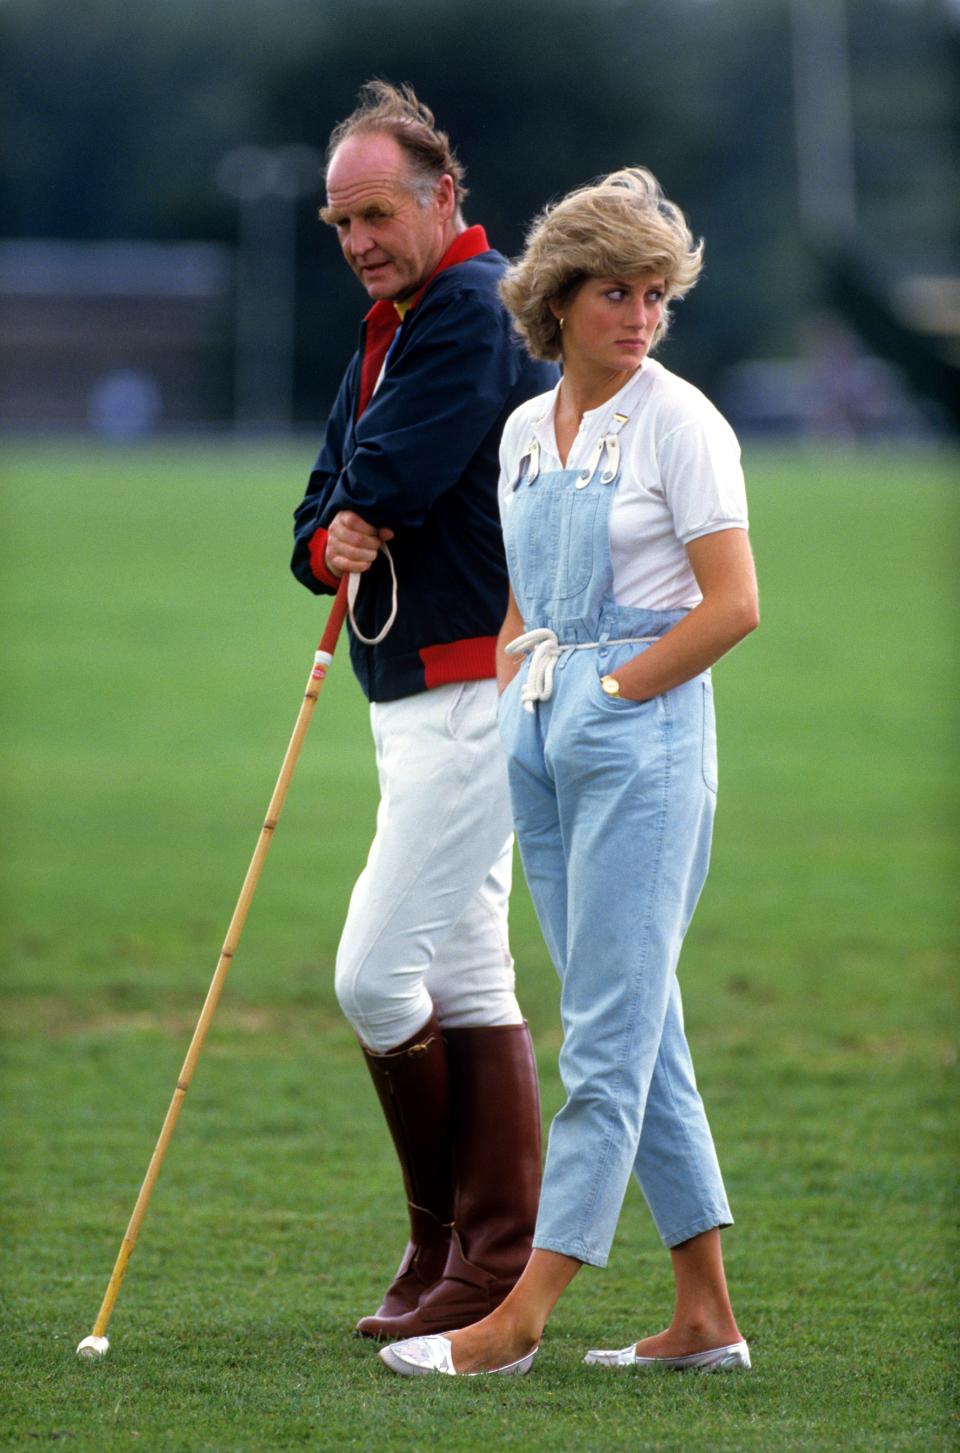 Mandatory Credit: Photo by BRENDAN BEIRNE/Shutterstock (135830b)Princess Diana AND RONALD FERGUSONBritish Royalty at Polo Match, Smiths Lawn, Windsor, Britain  - Jun 1987